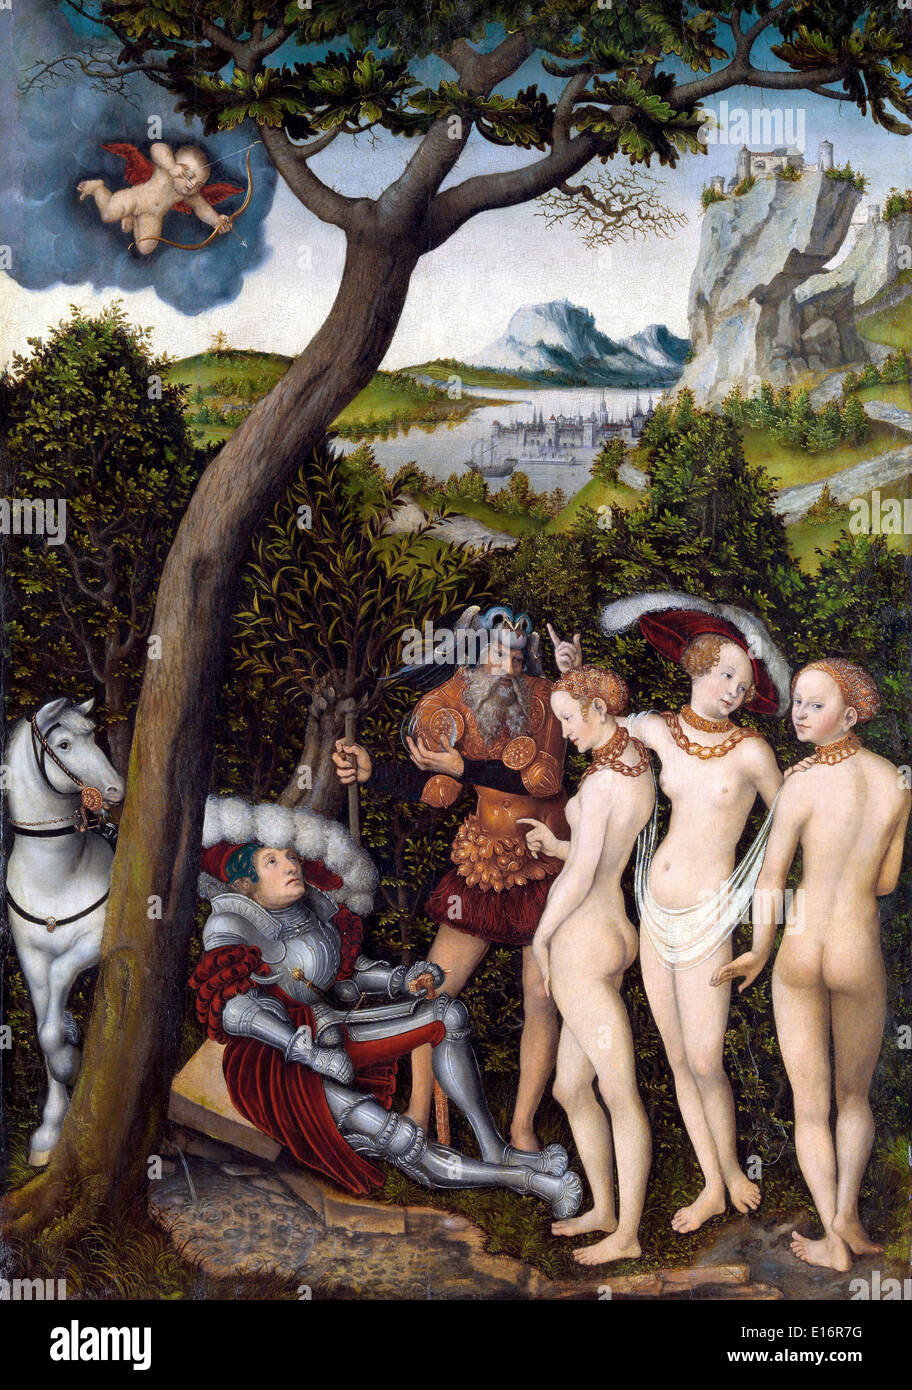 The Judgment of Paris by Lucas Cranach the Elder, 1528 Stock Photo